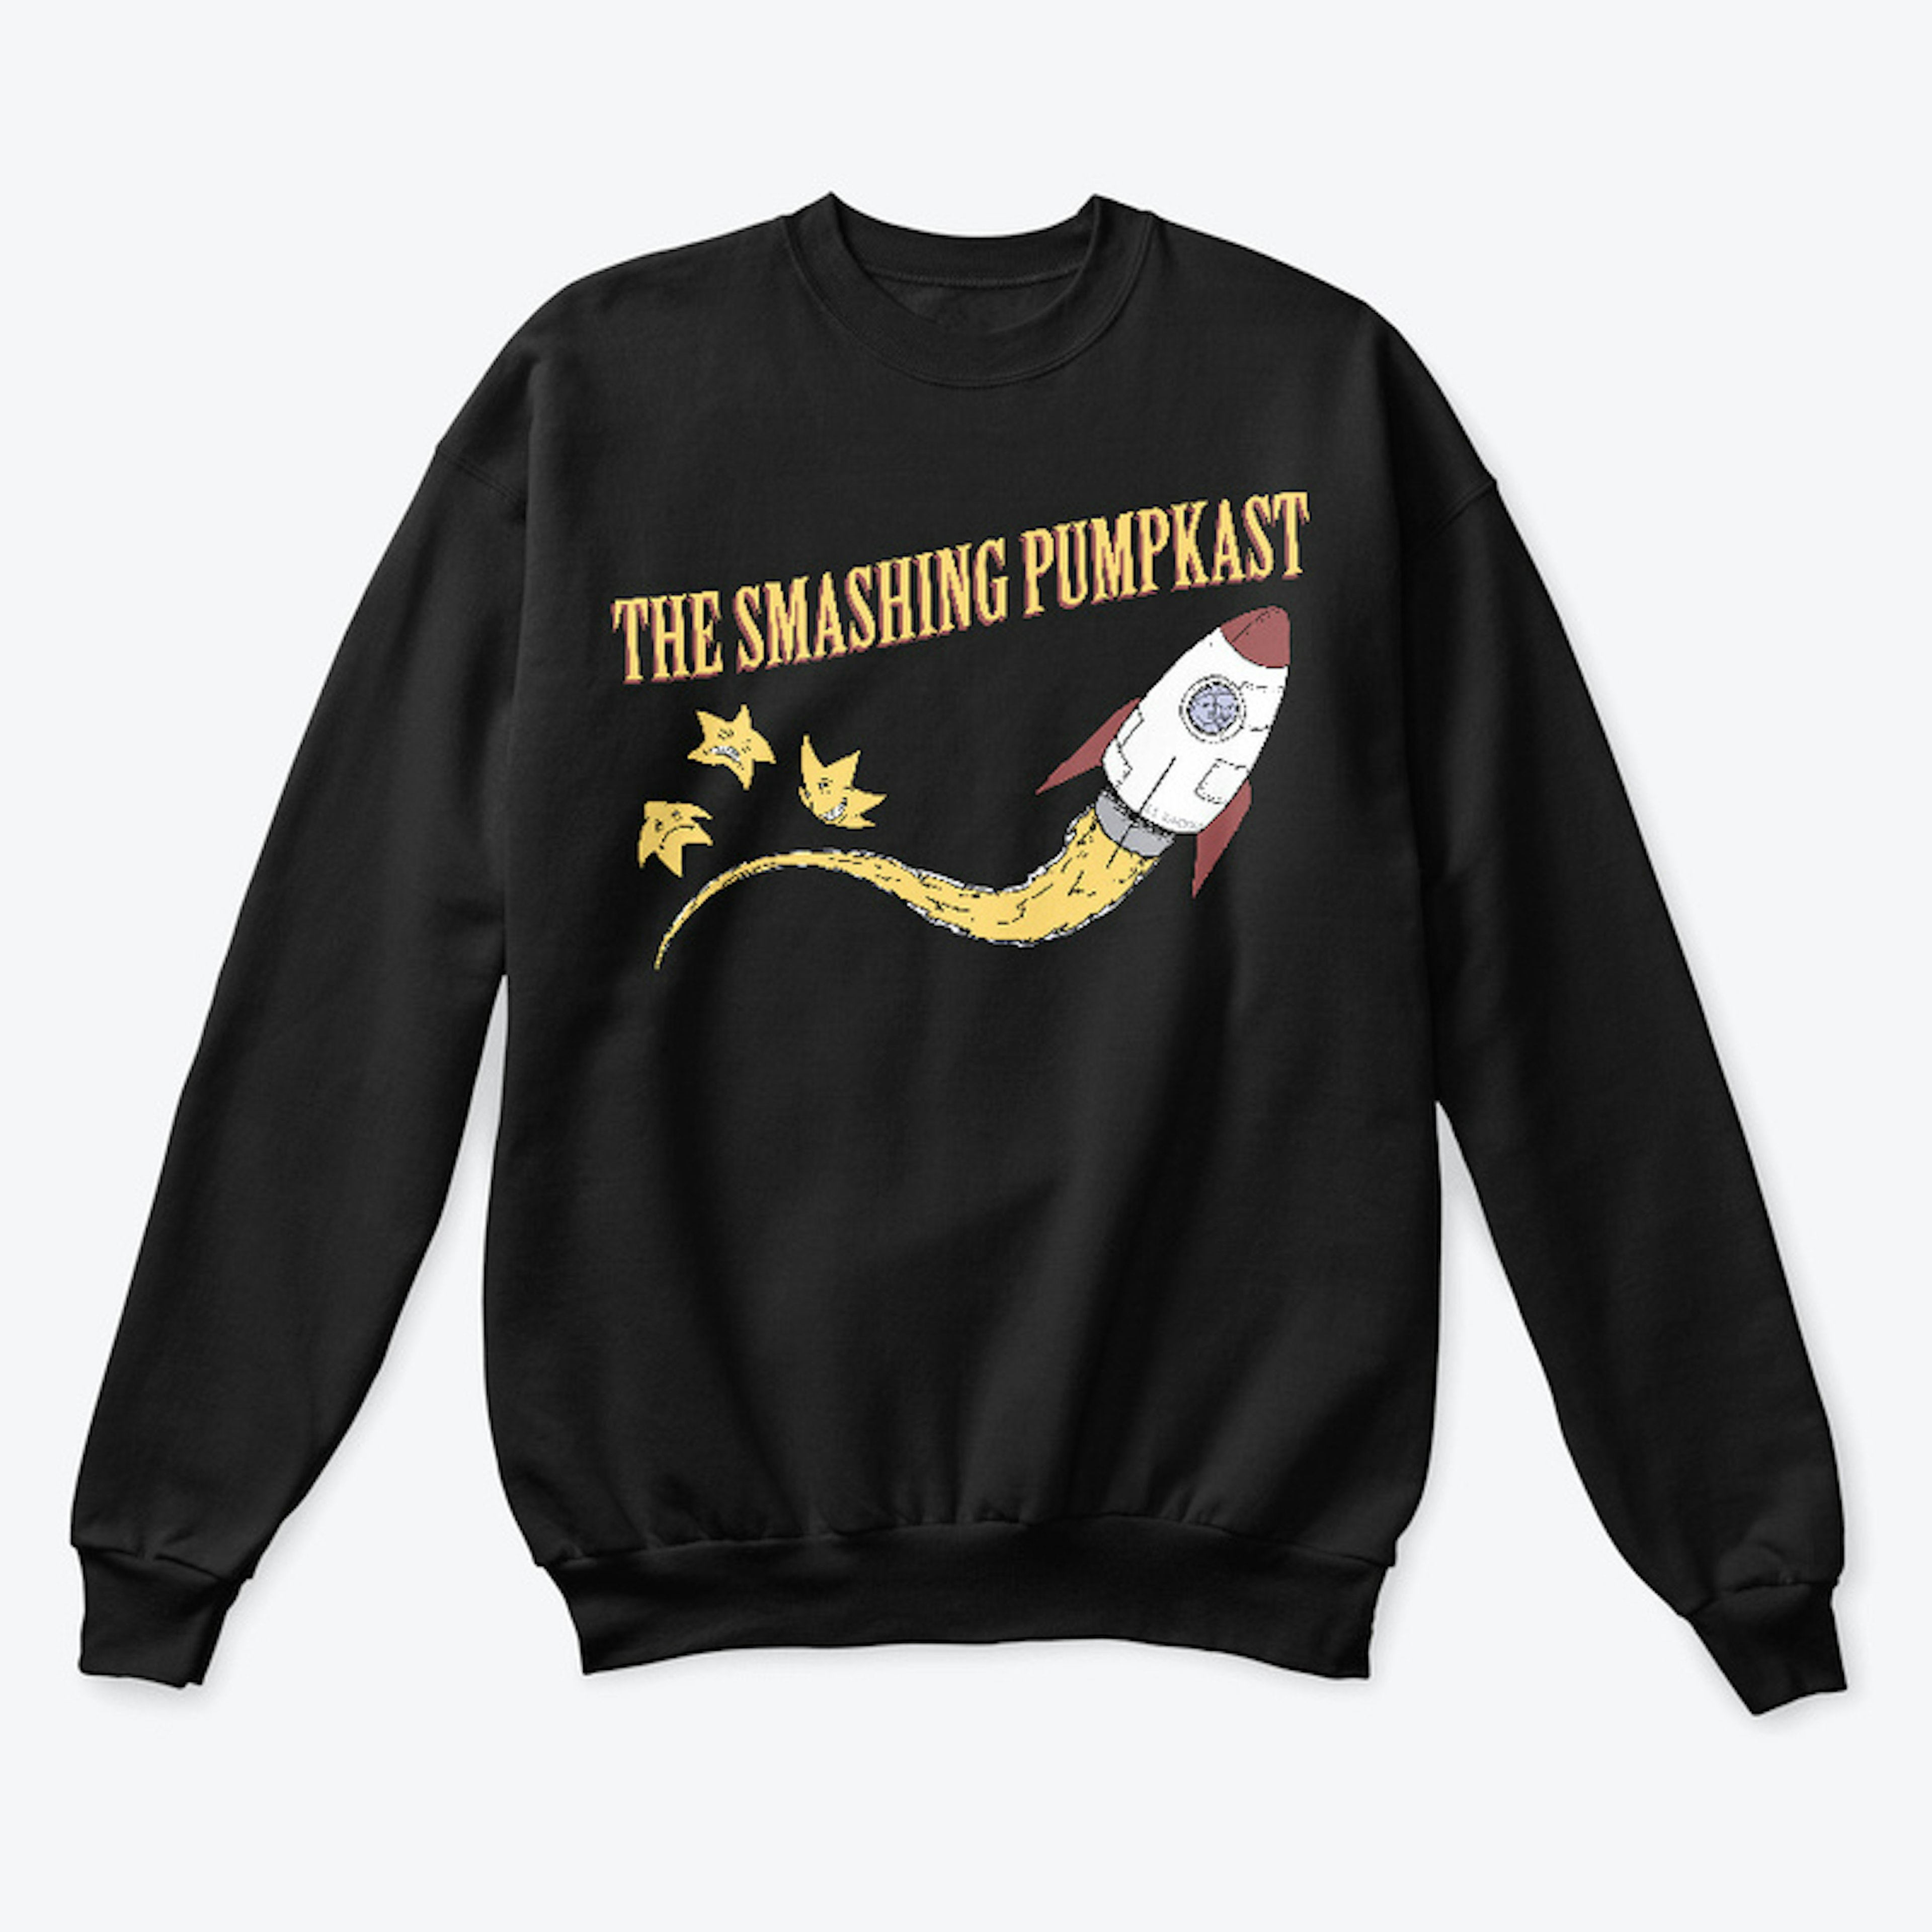 Pumpkast Rocketship Sweatshirt